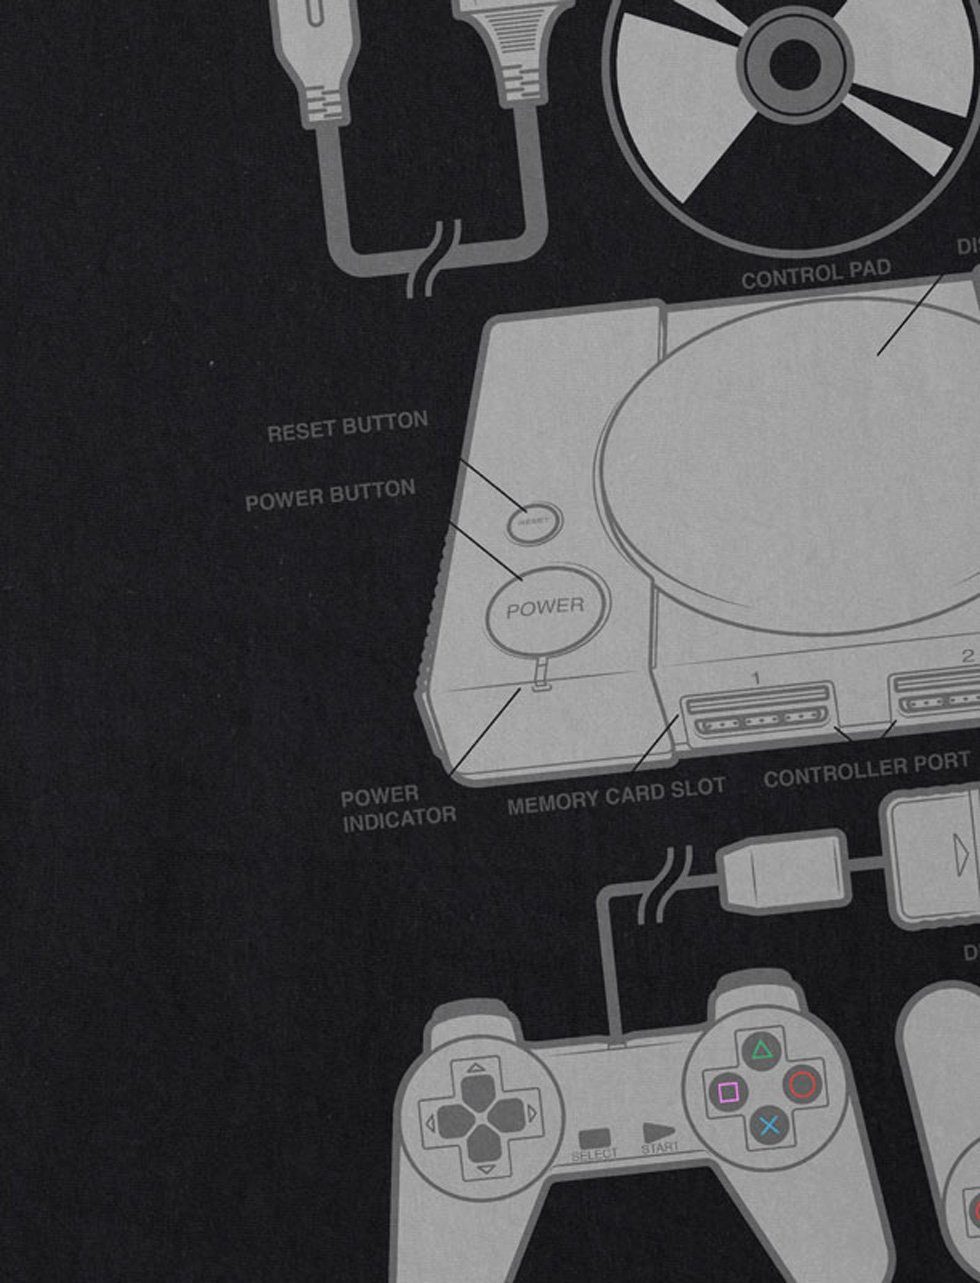 PS T-Shirt Print-Shirt psx style3 Herren Retro Gamer gamepad konsole schwarz PS1 classic